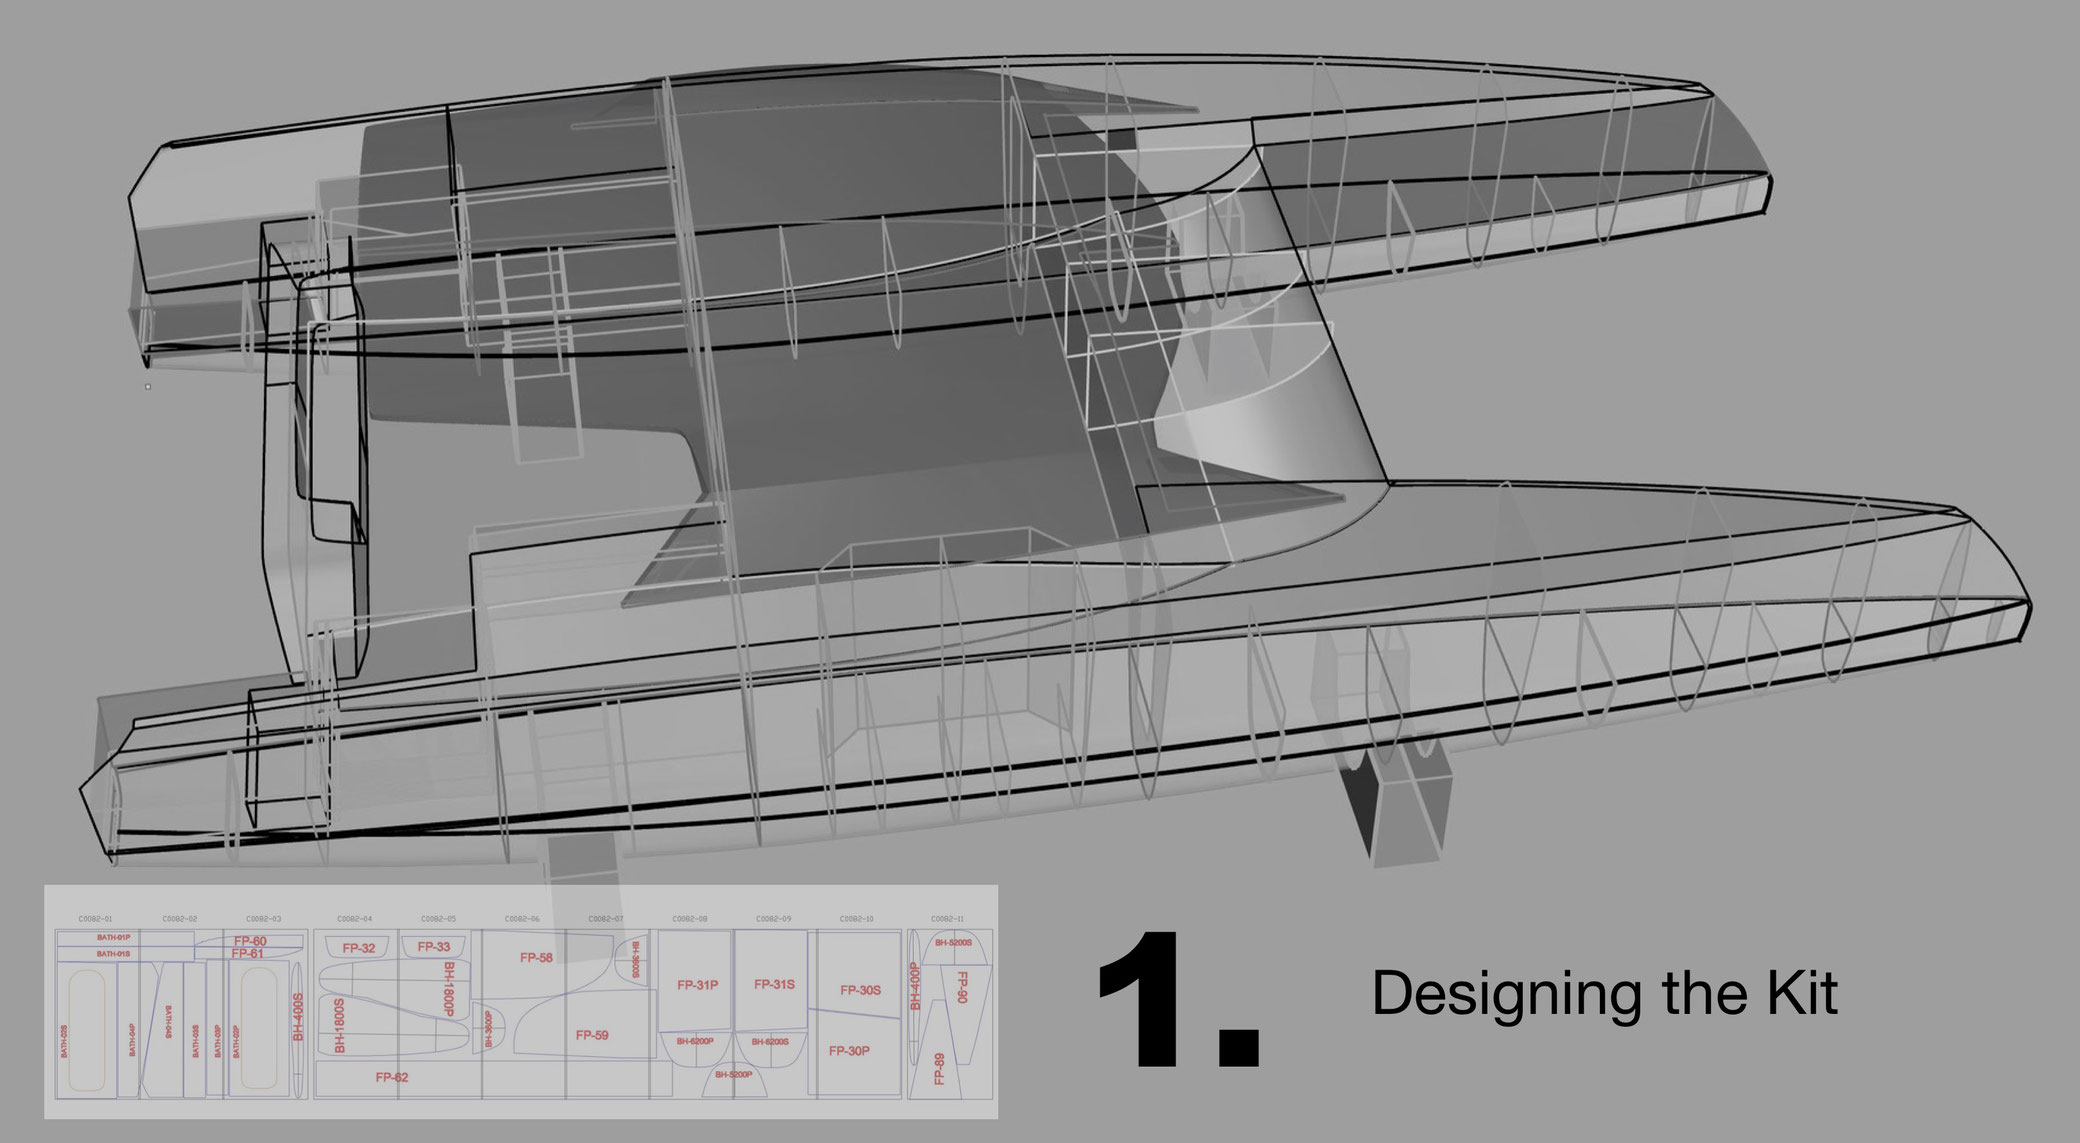 how to build a catamaran hull